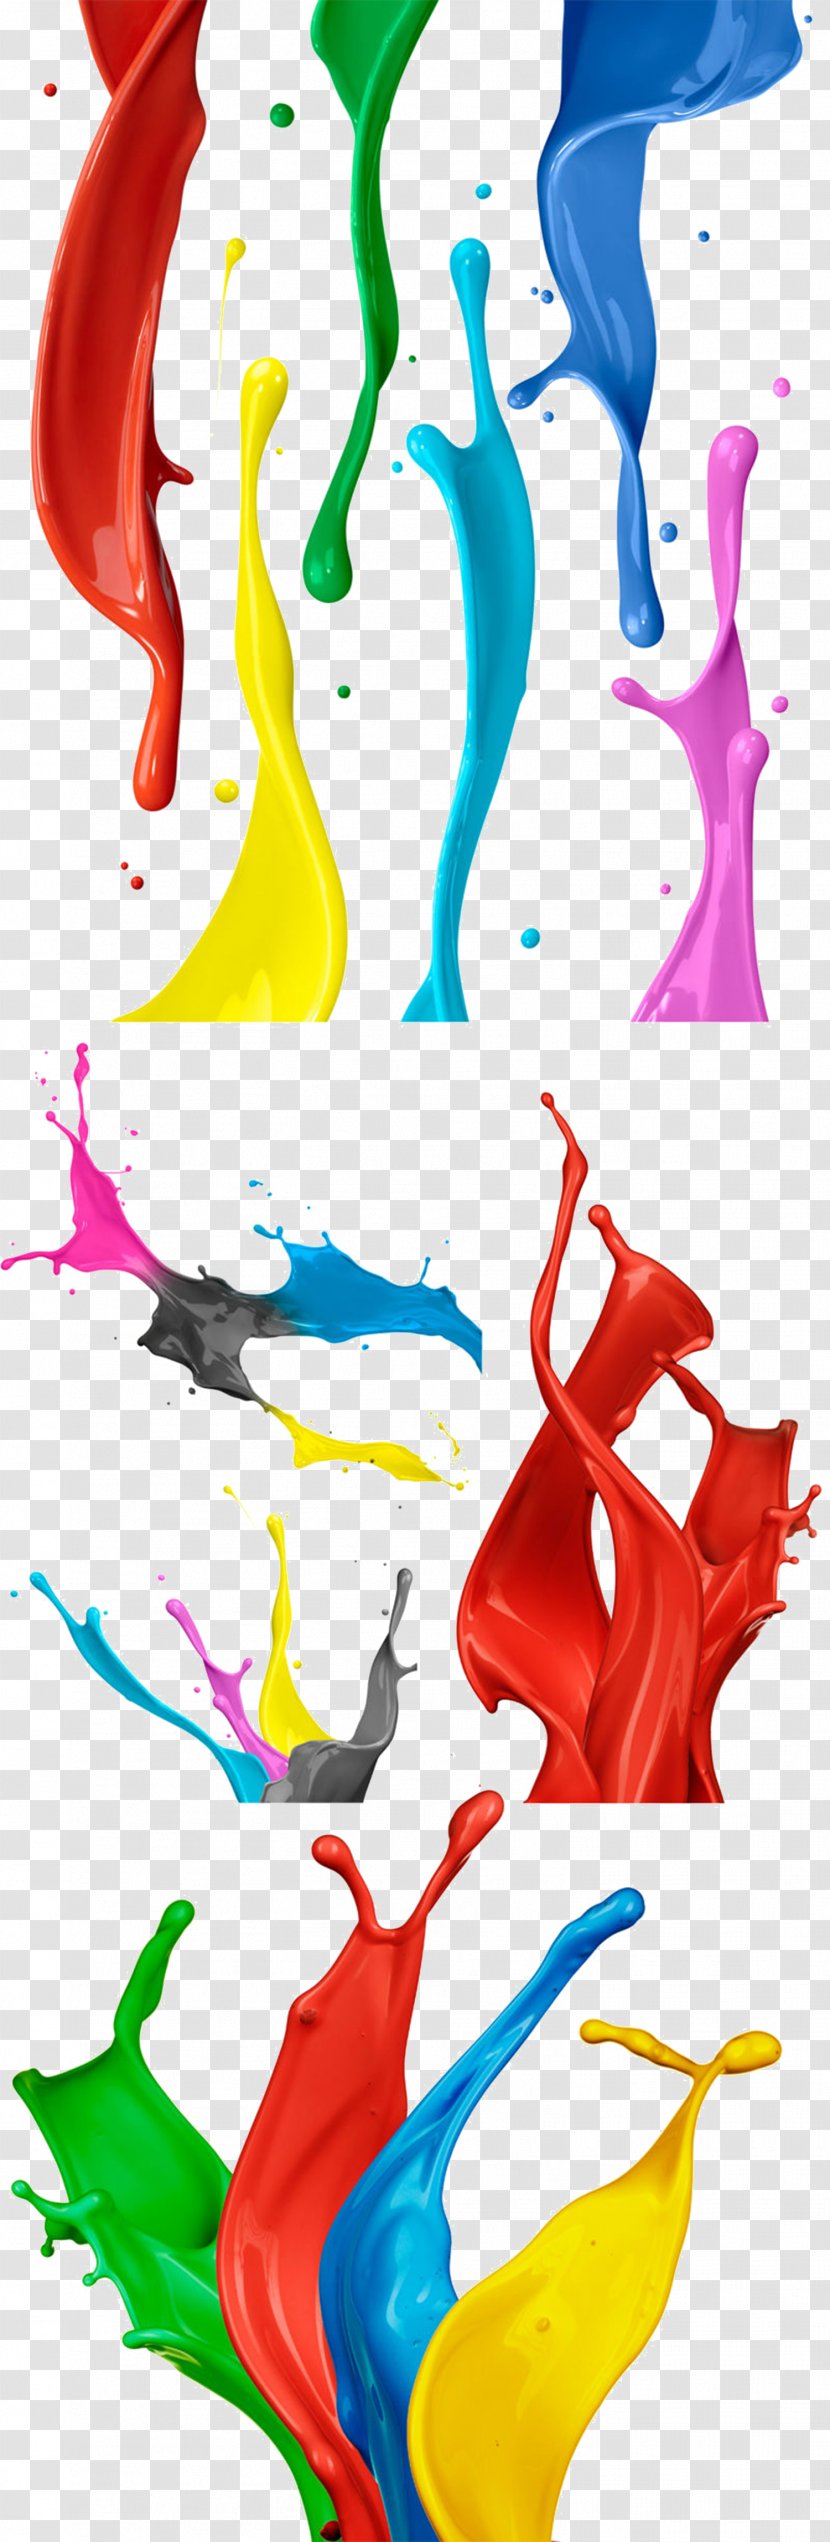 Watercolor Painting Clip Art - 5 Kinds Of Color Paint Splashes Transparent PNG